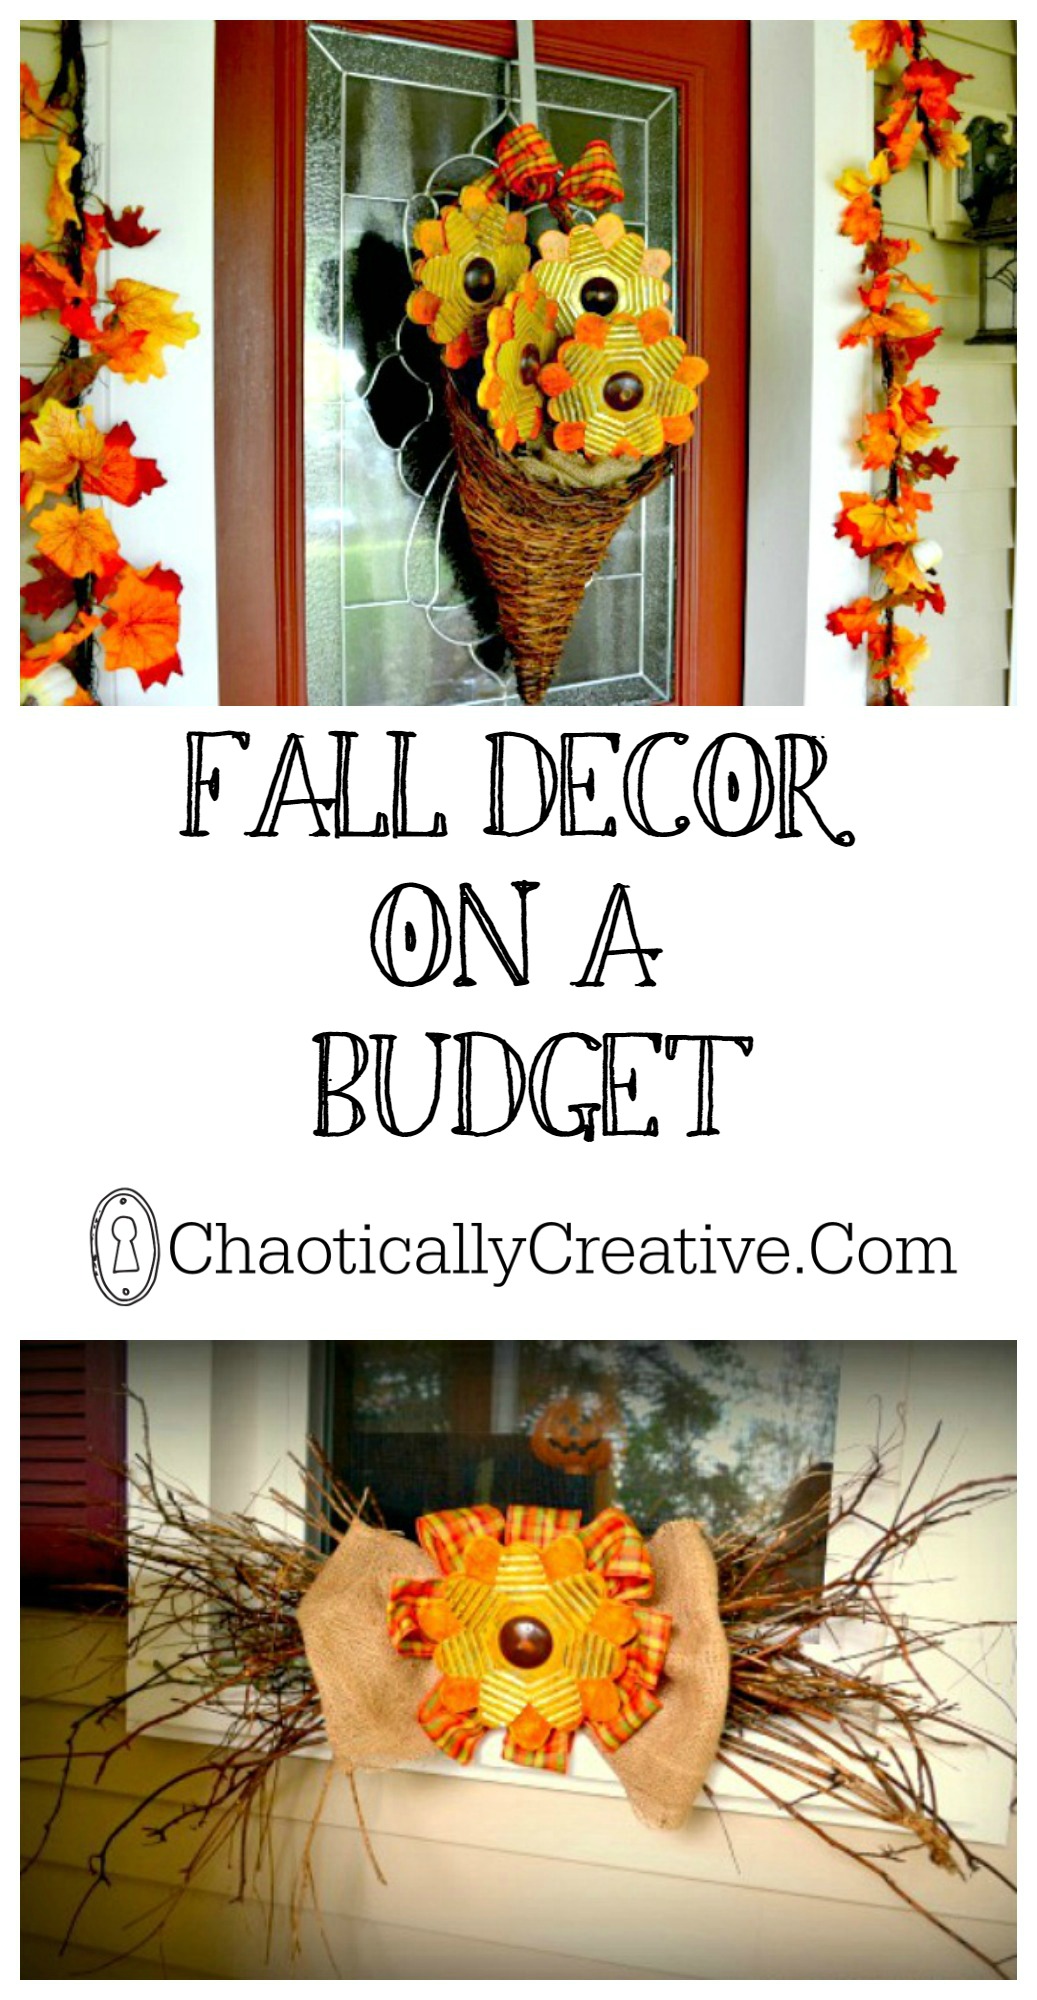 Fall Decor on A Budget